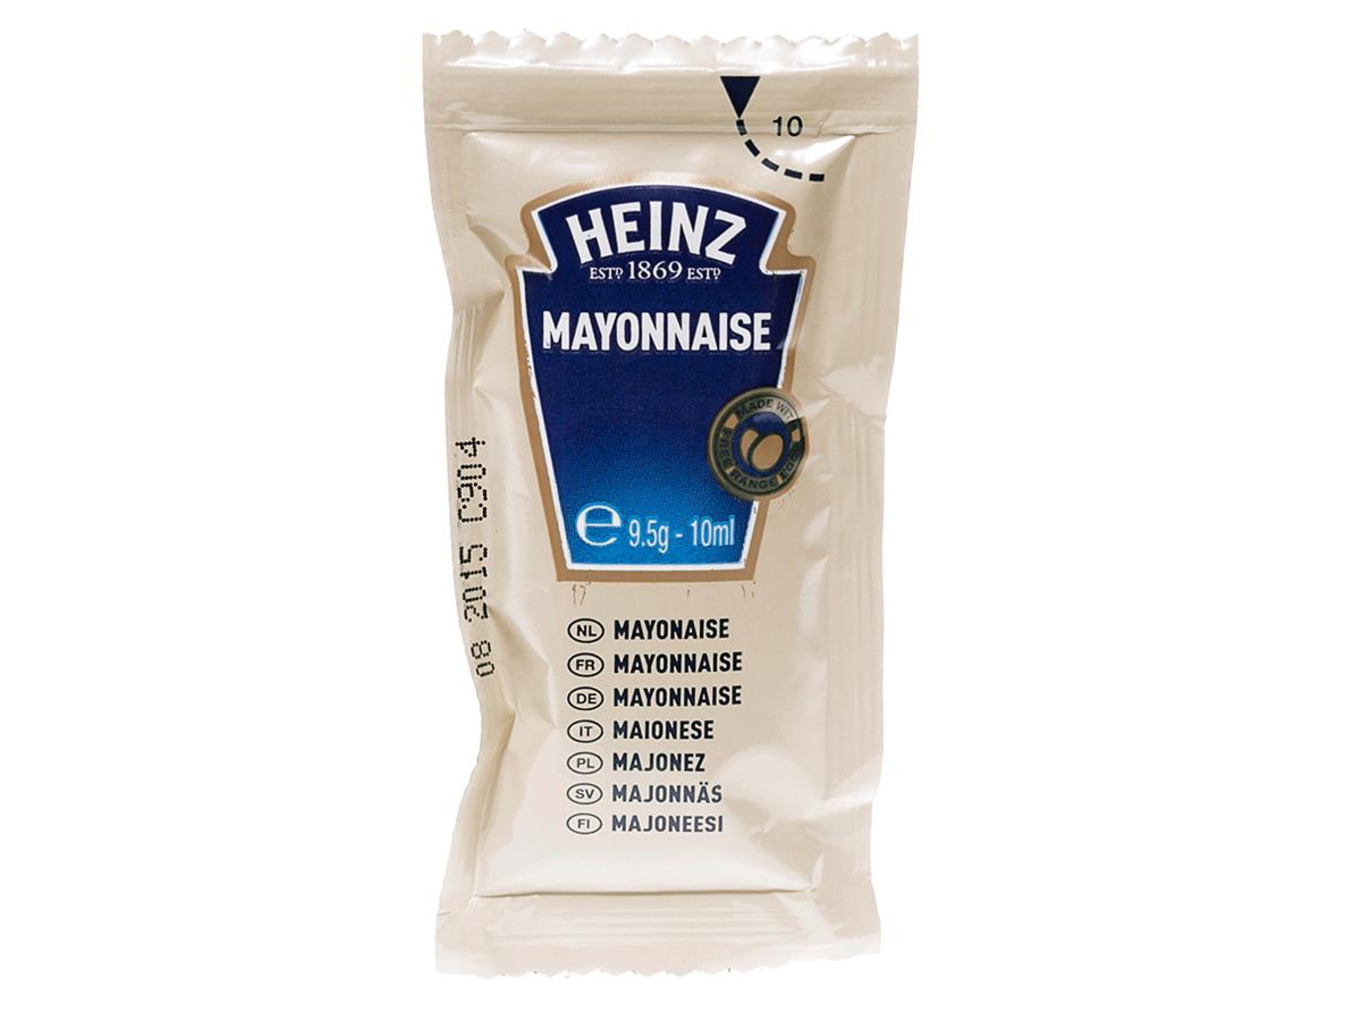 HEINZ MAYONNAISE Sachets 9.5g 10ml SAUCE Individual Single Portion